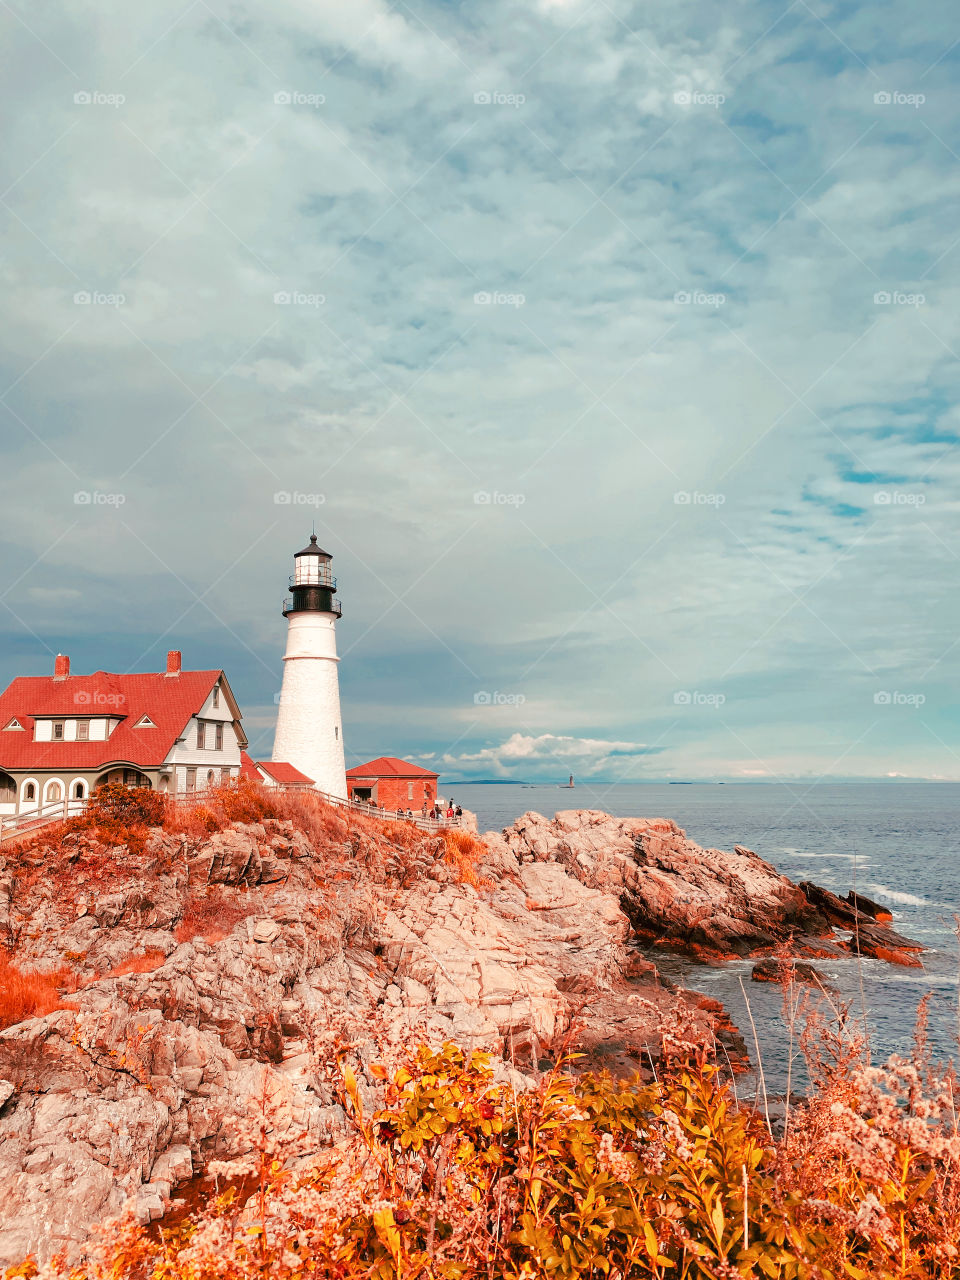 New England lighthouse 